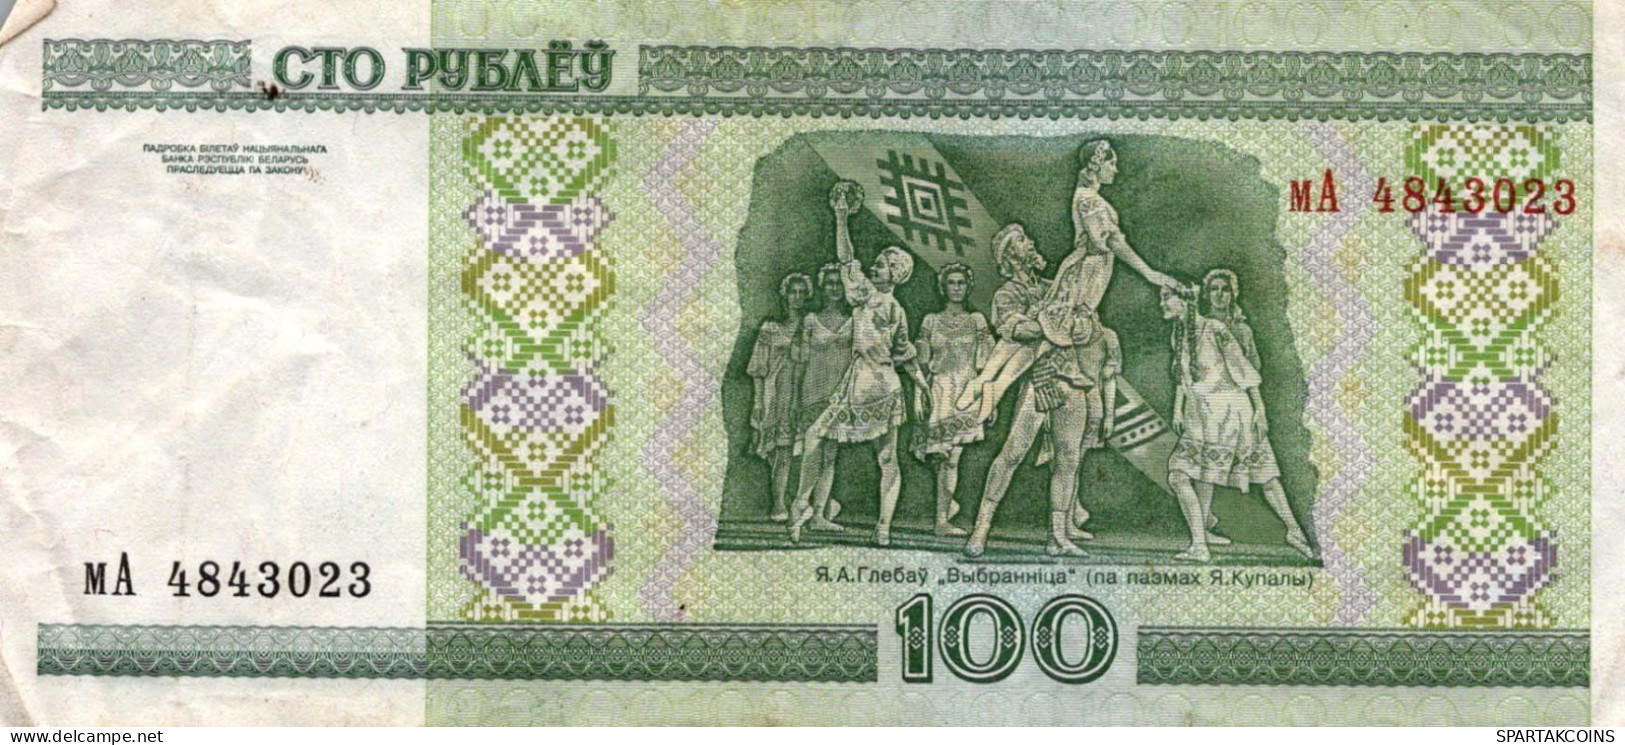 100 RUBLES 2000 BELARUS Papiergeld Banknote #PK599 - [11] Local Banknote Issues